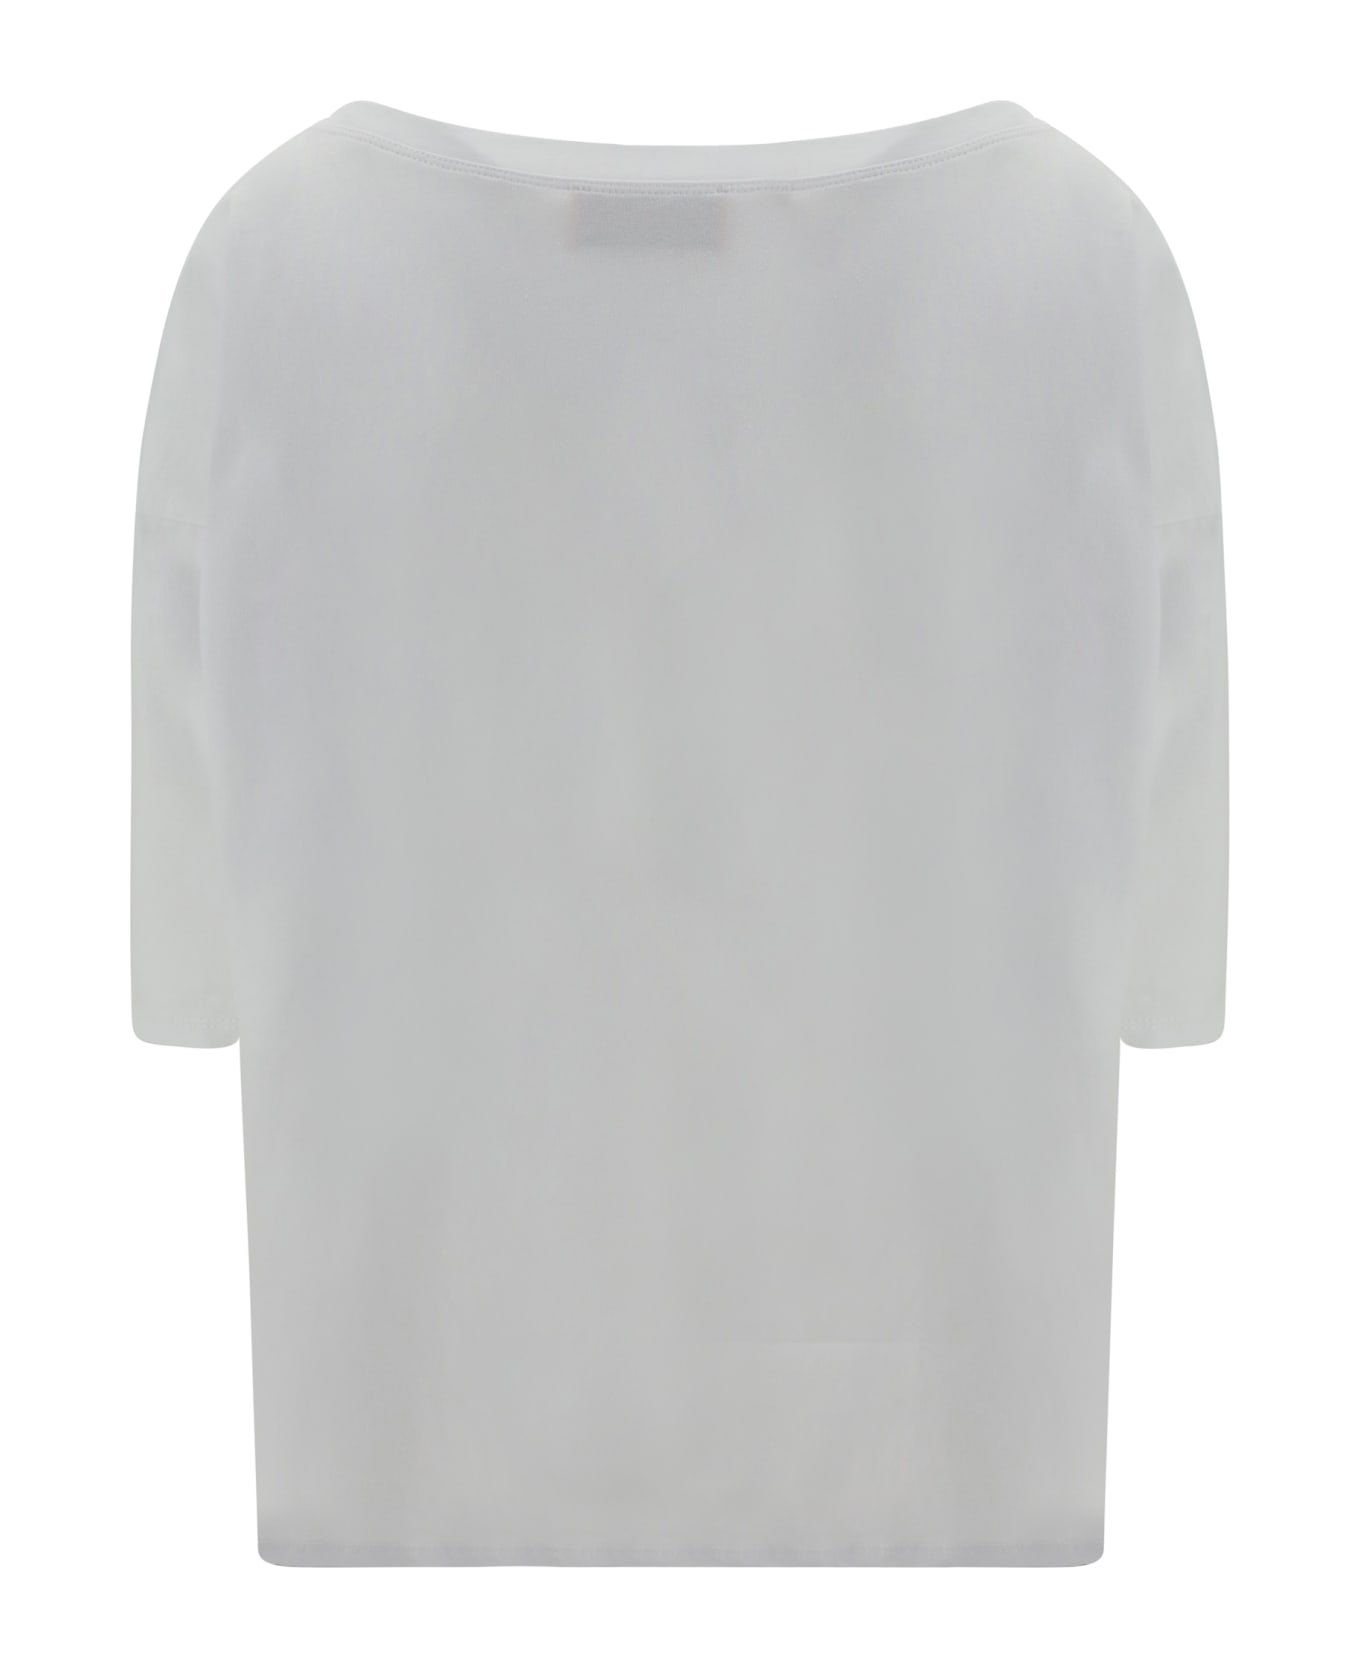 Wild Cashmere T-shirt - Bianco